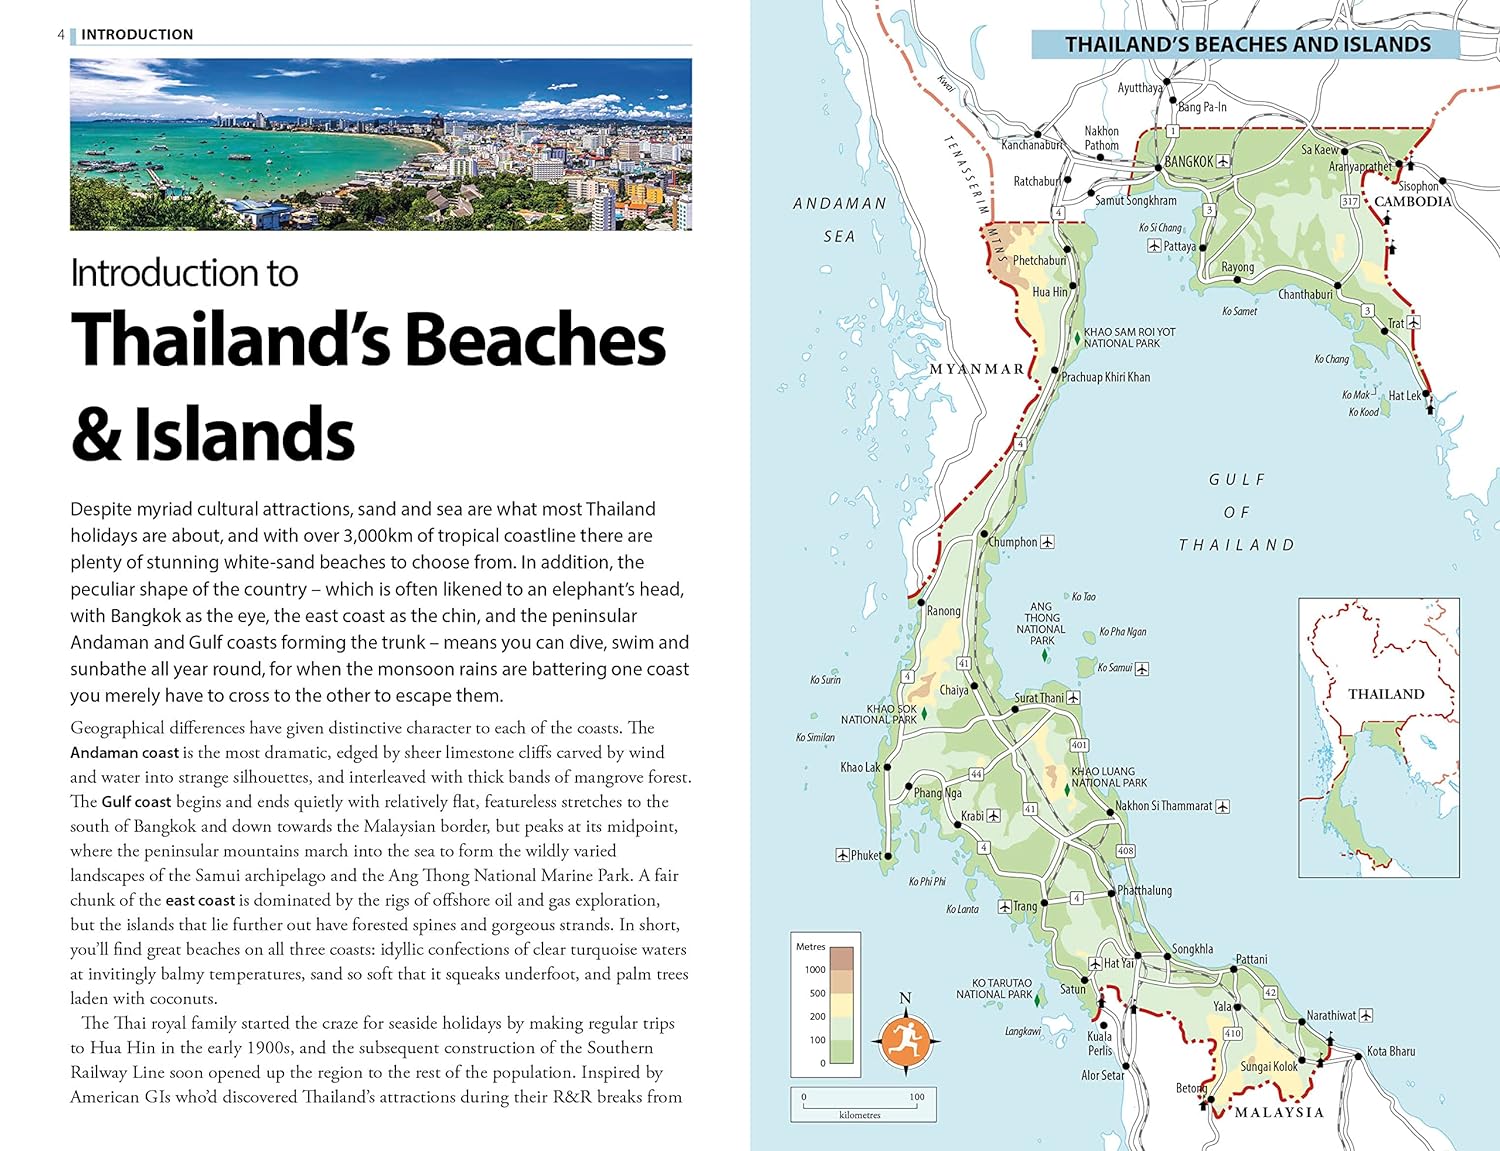 Thailand's Beaches & Islands - The Rough Guide